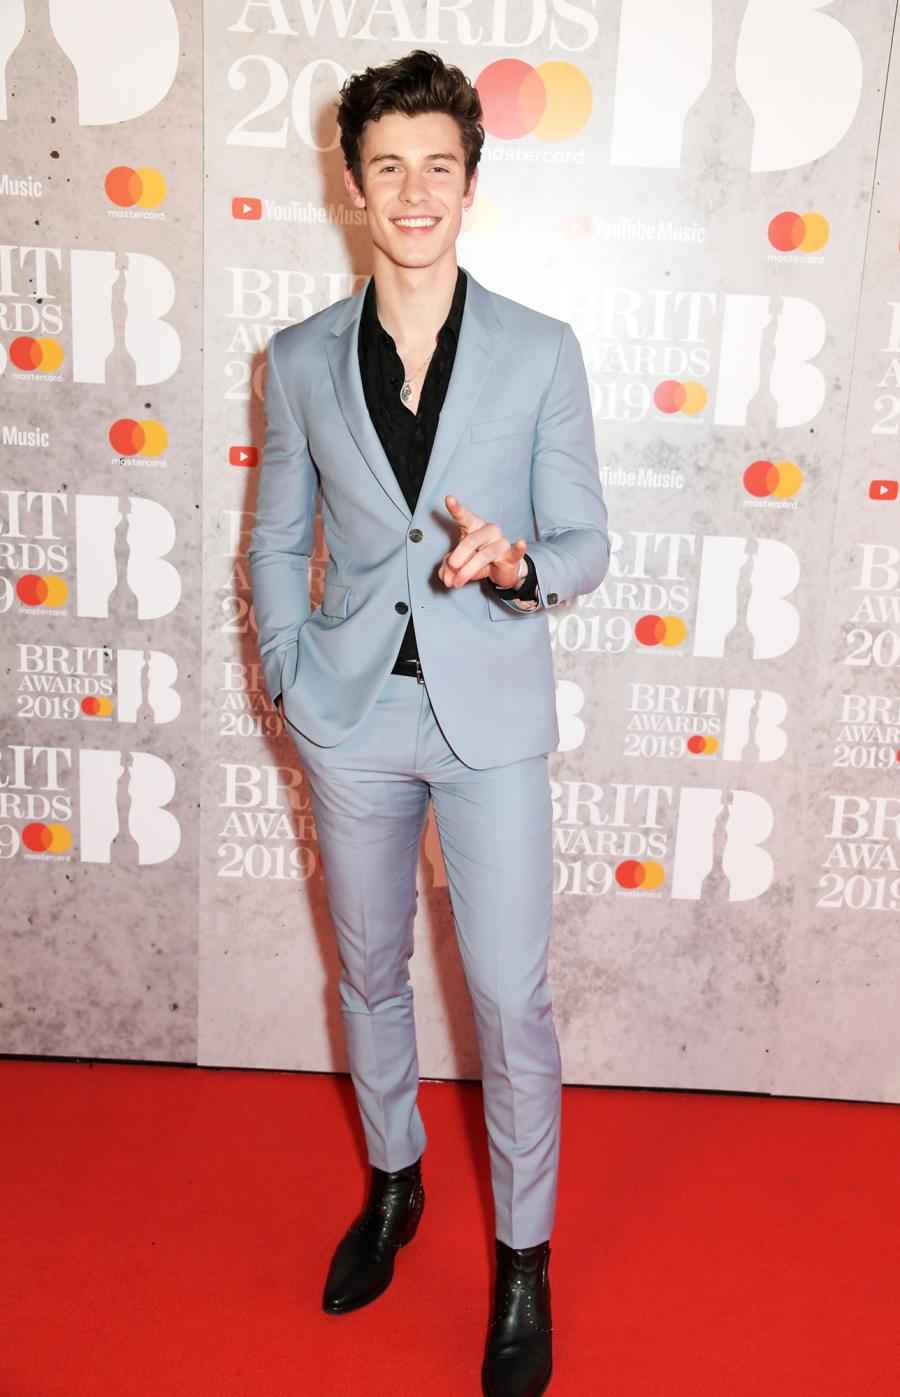 brit awards red carpet 2019 Shawn Mendes